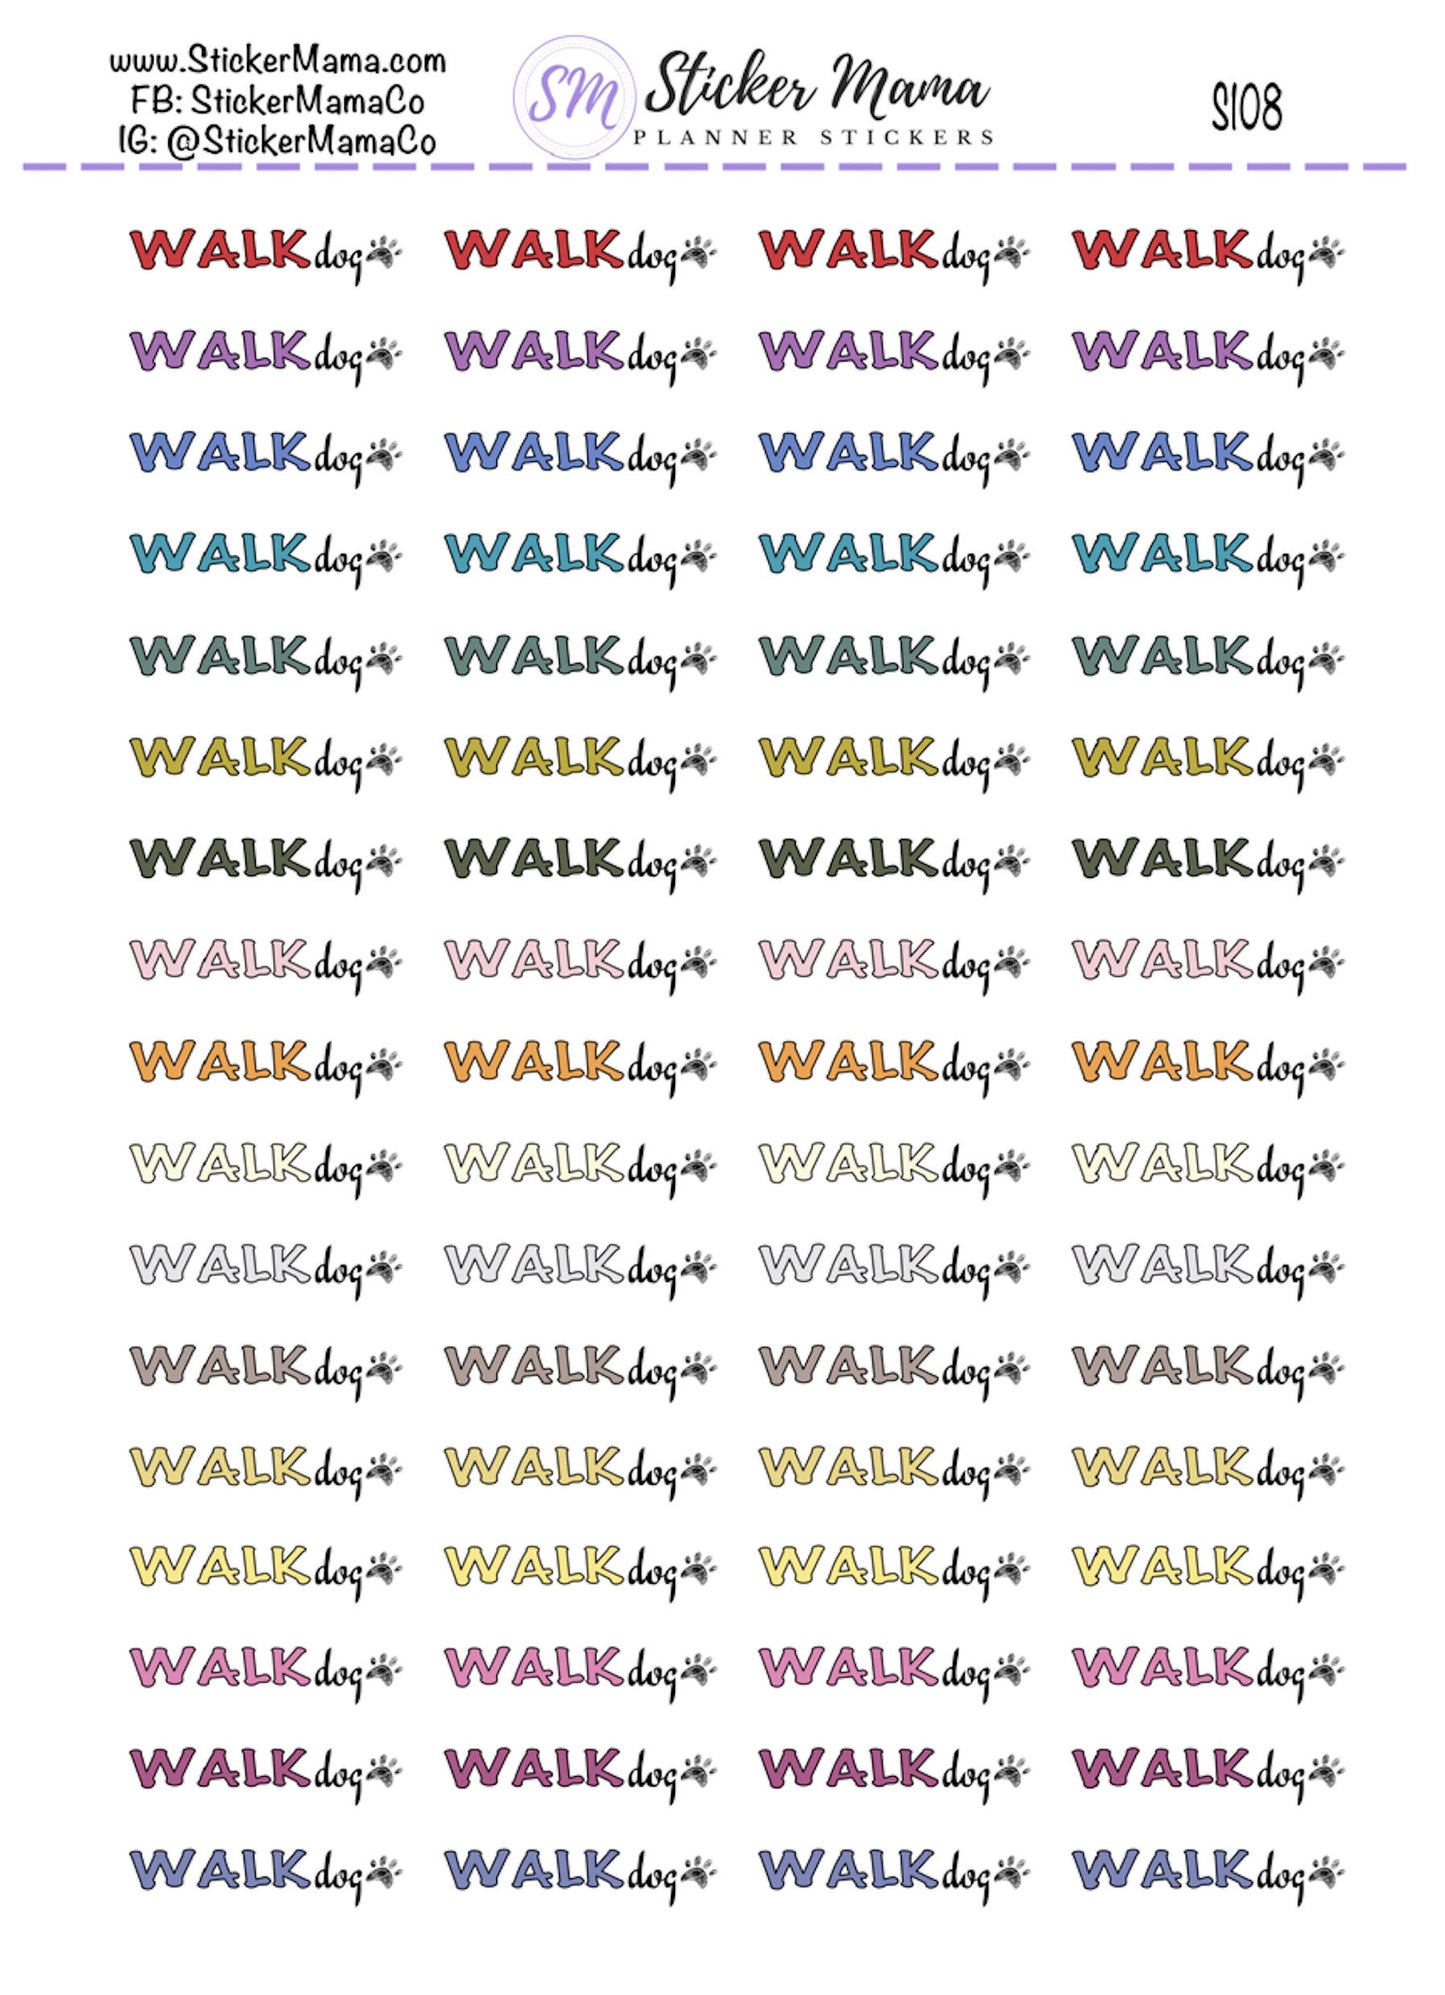 WALK DOG STICKERS S108 - Color Script Planner Stickers - Color Script Font Planner Stickers